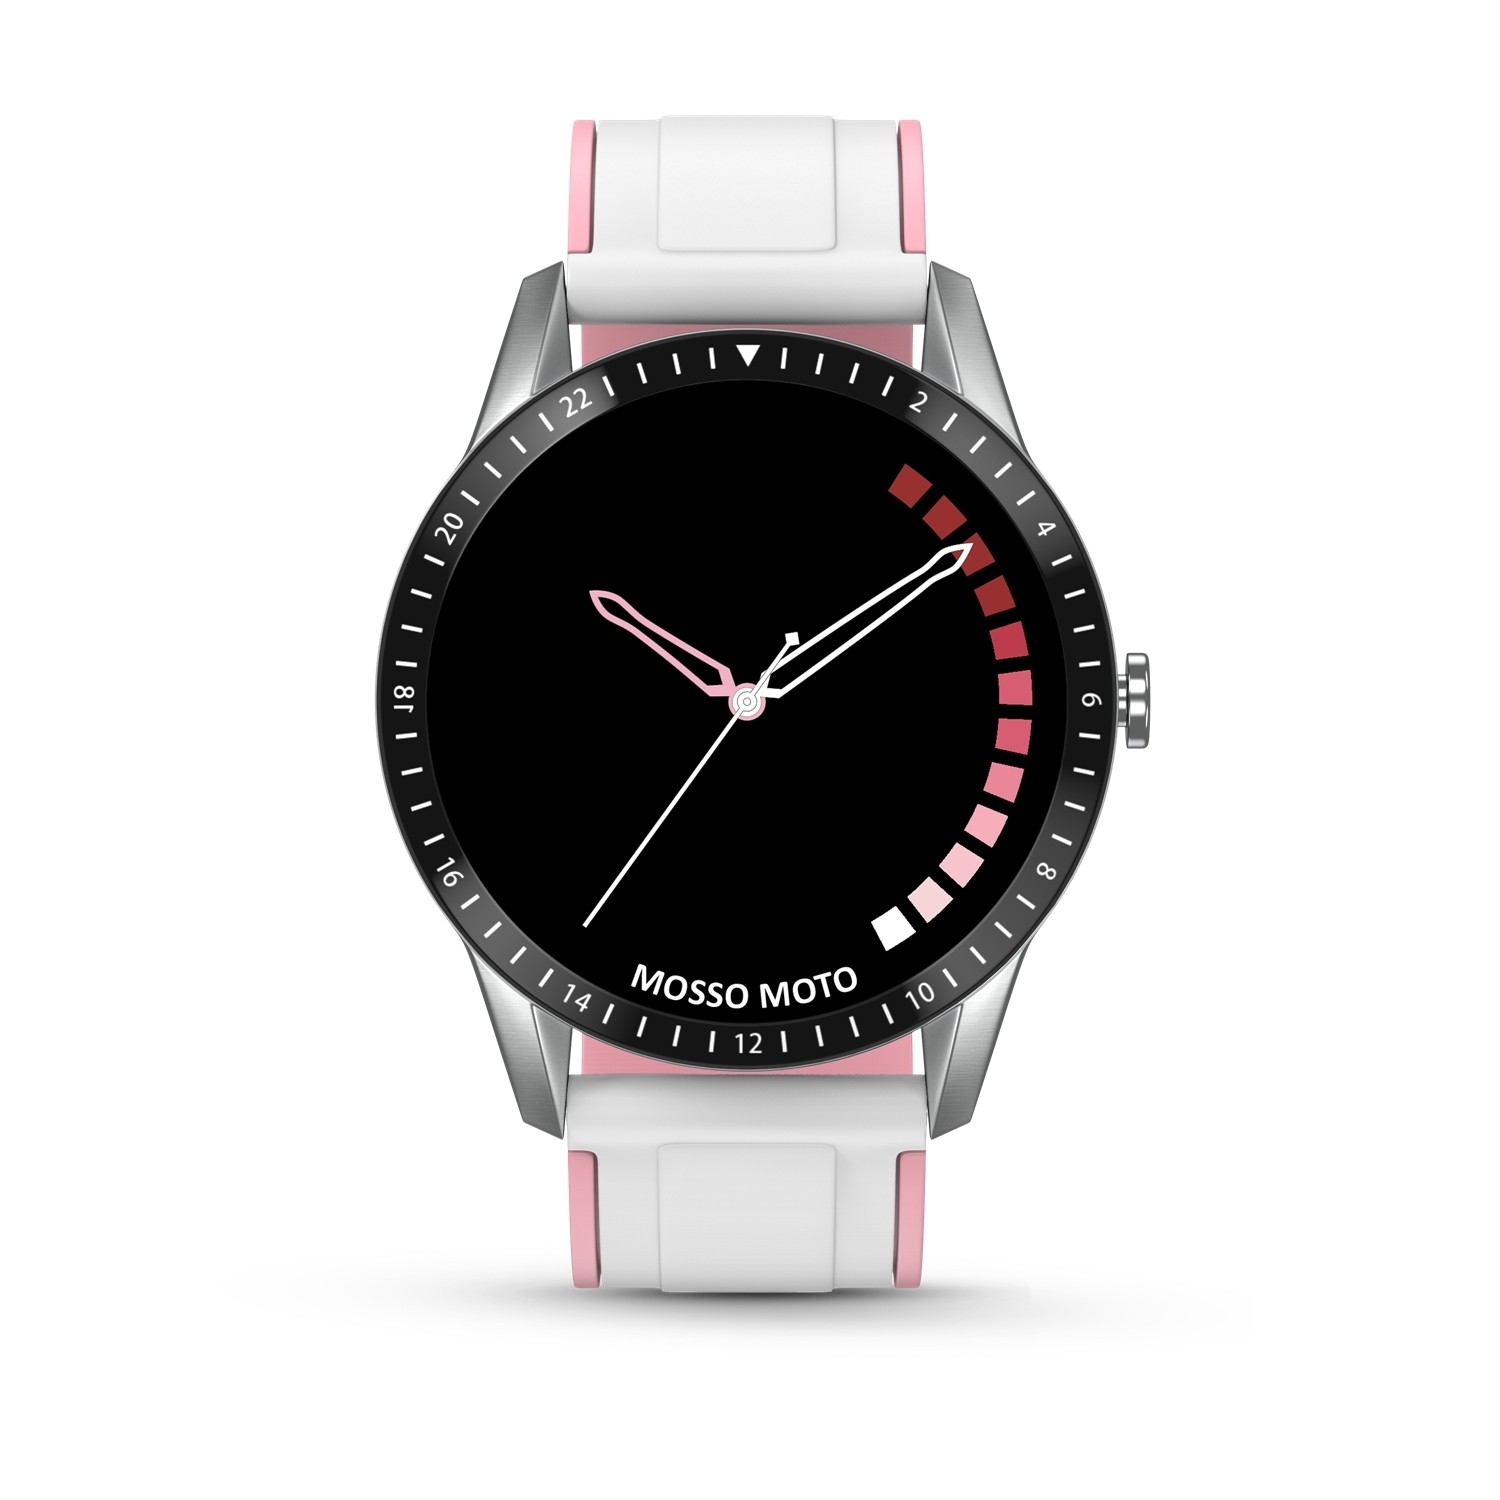 Smartwatches : SW001